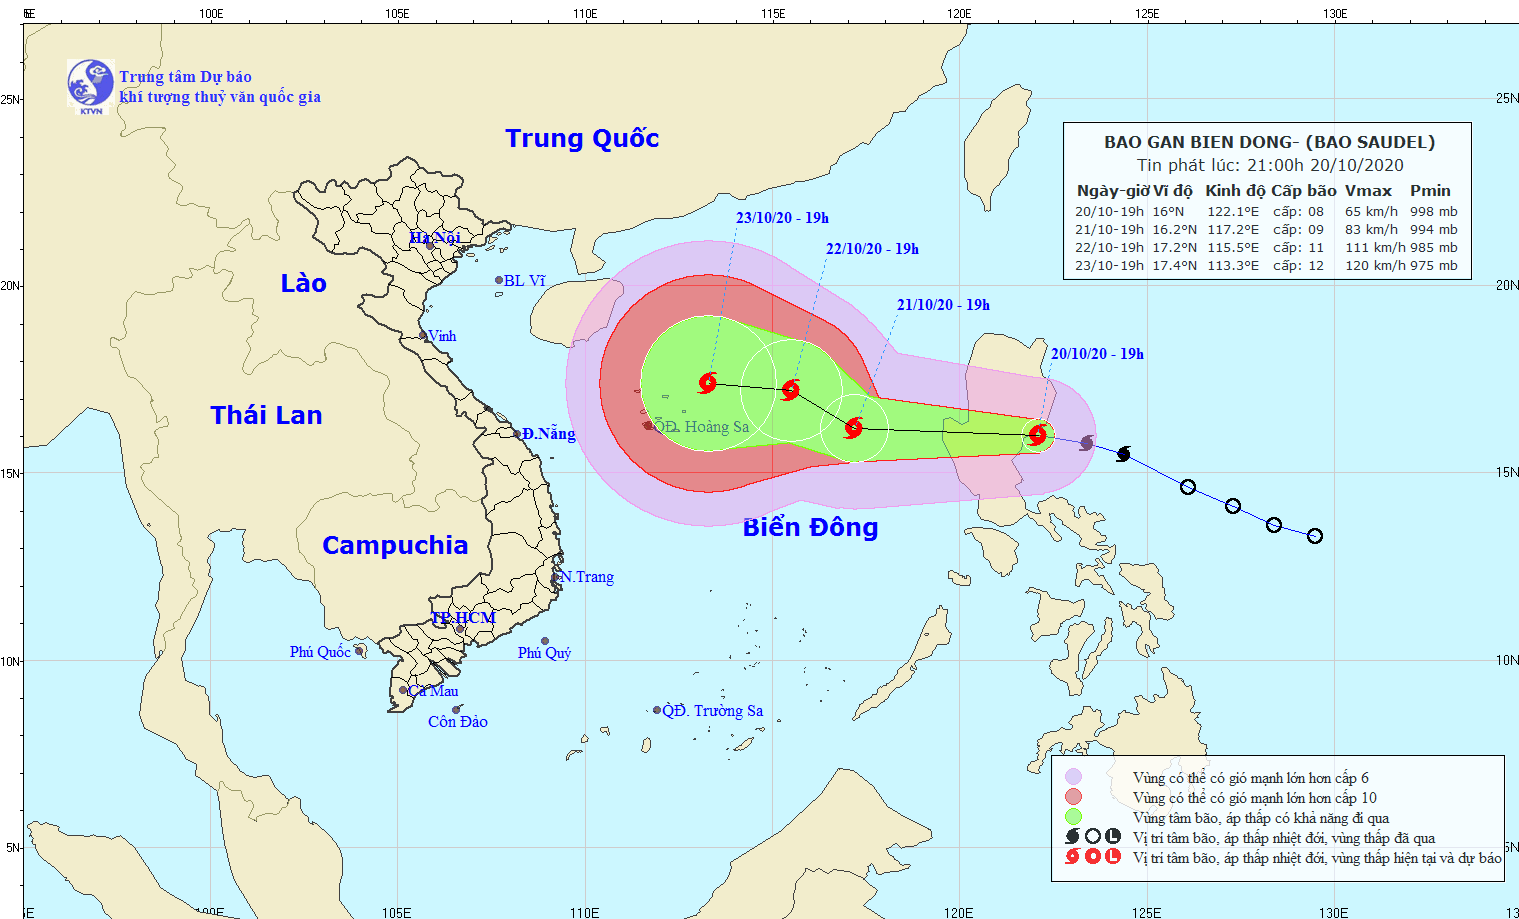 Storm Saudel gains strength, heading toward mainland Vietnam - ảnh 1